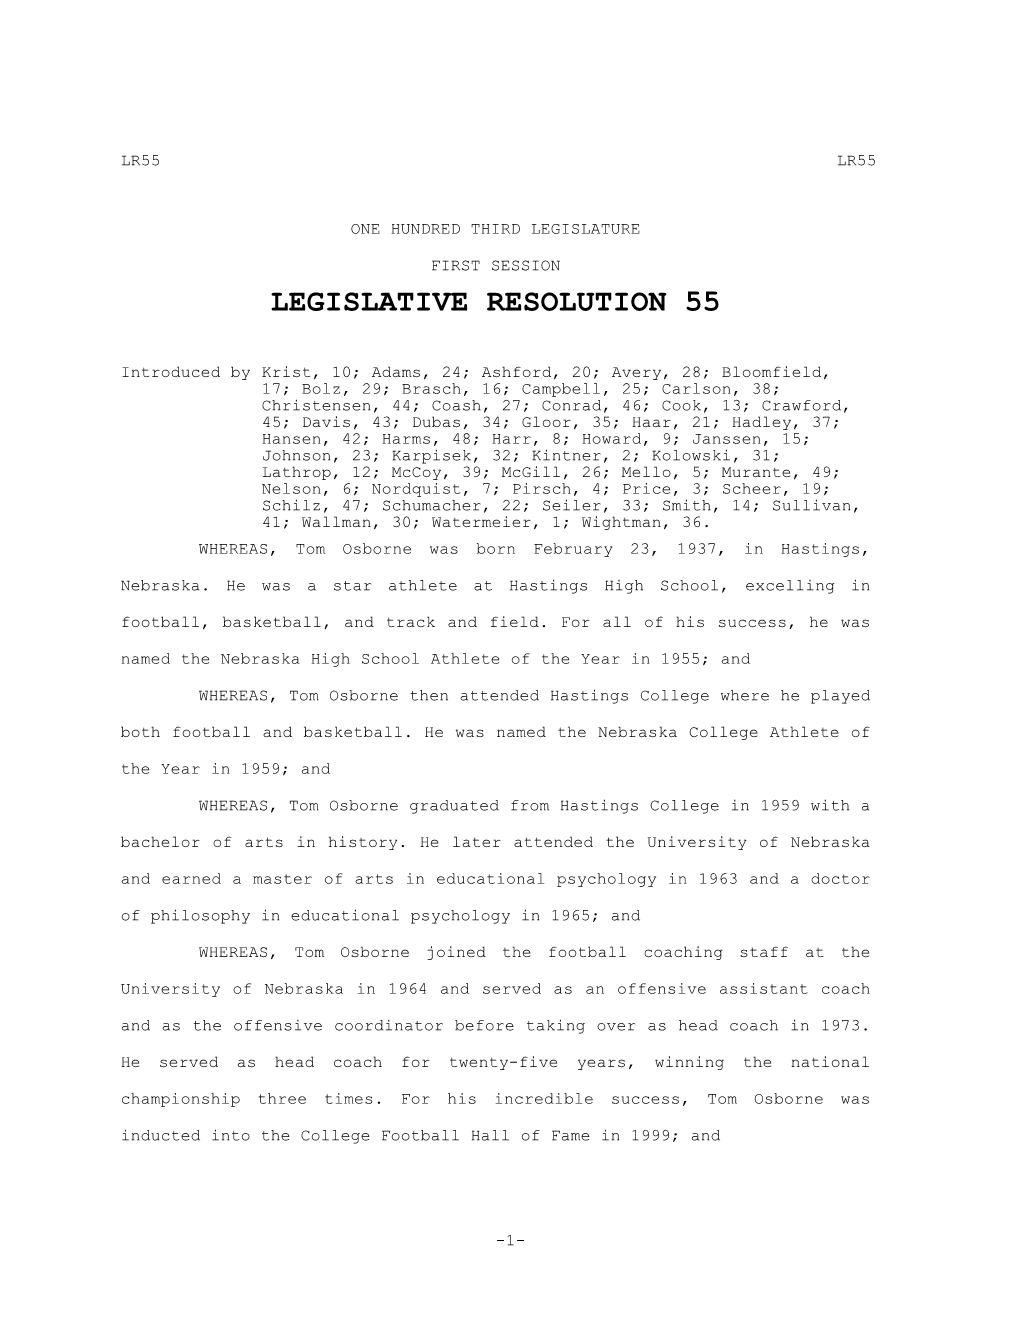 Legislative Resolution 55